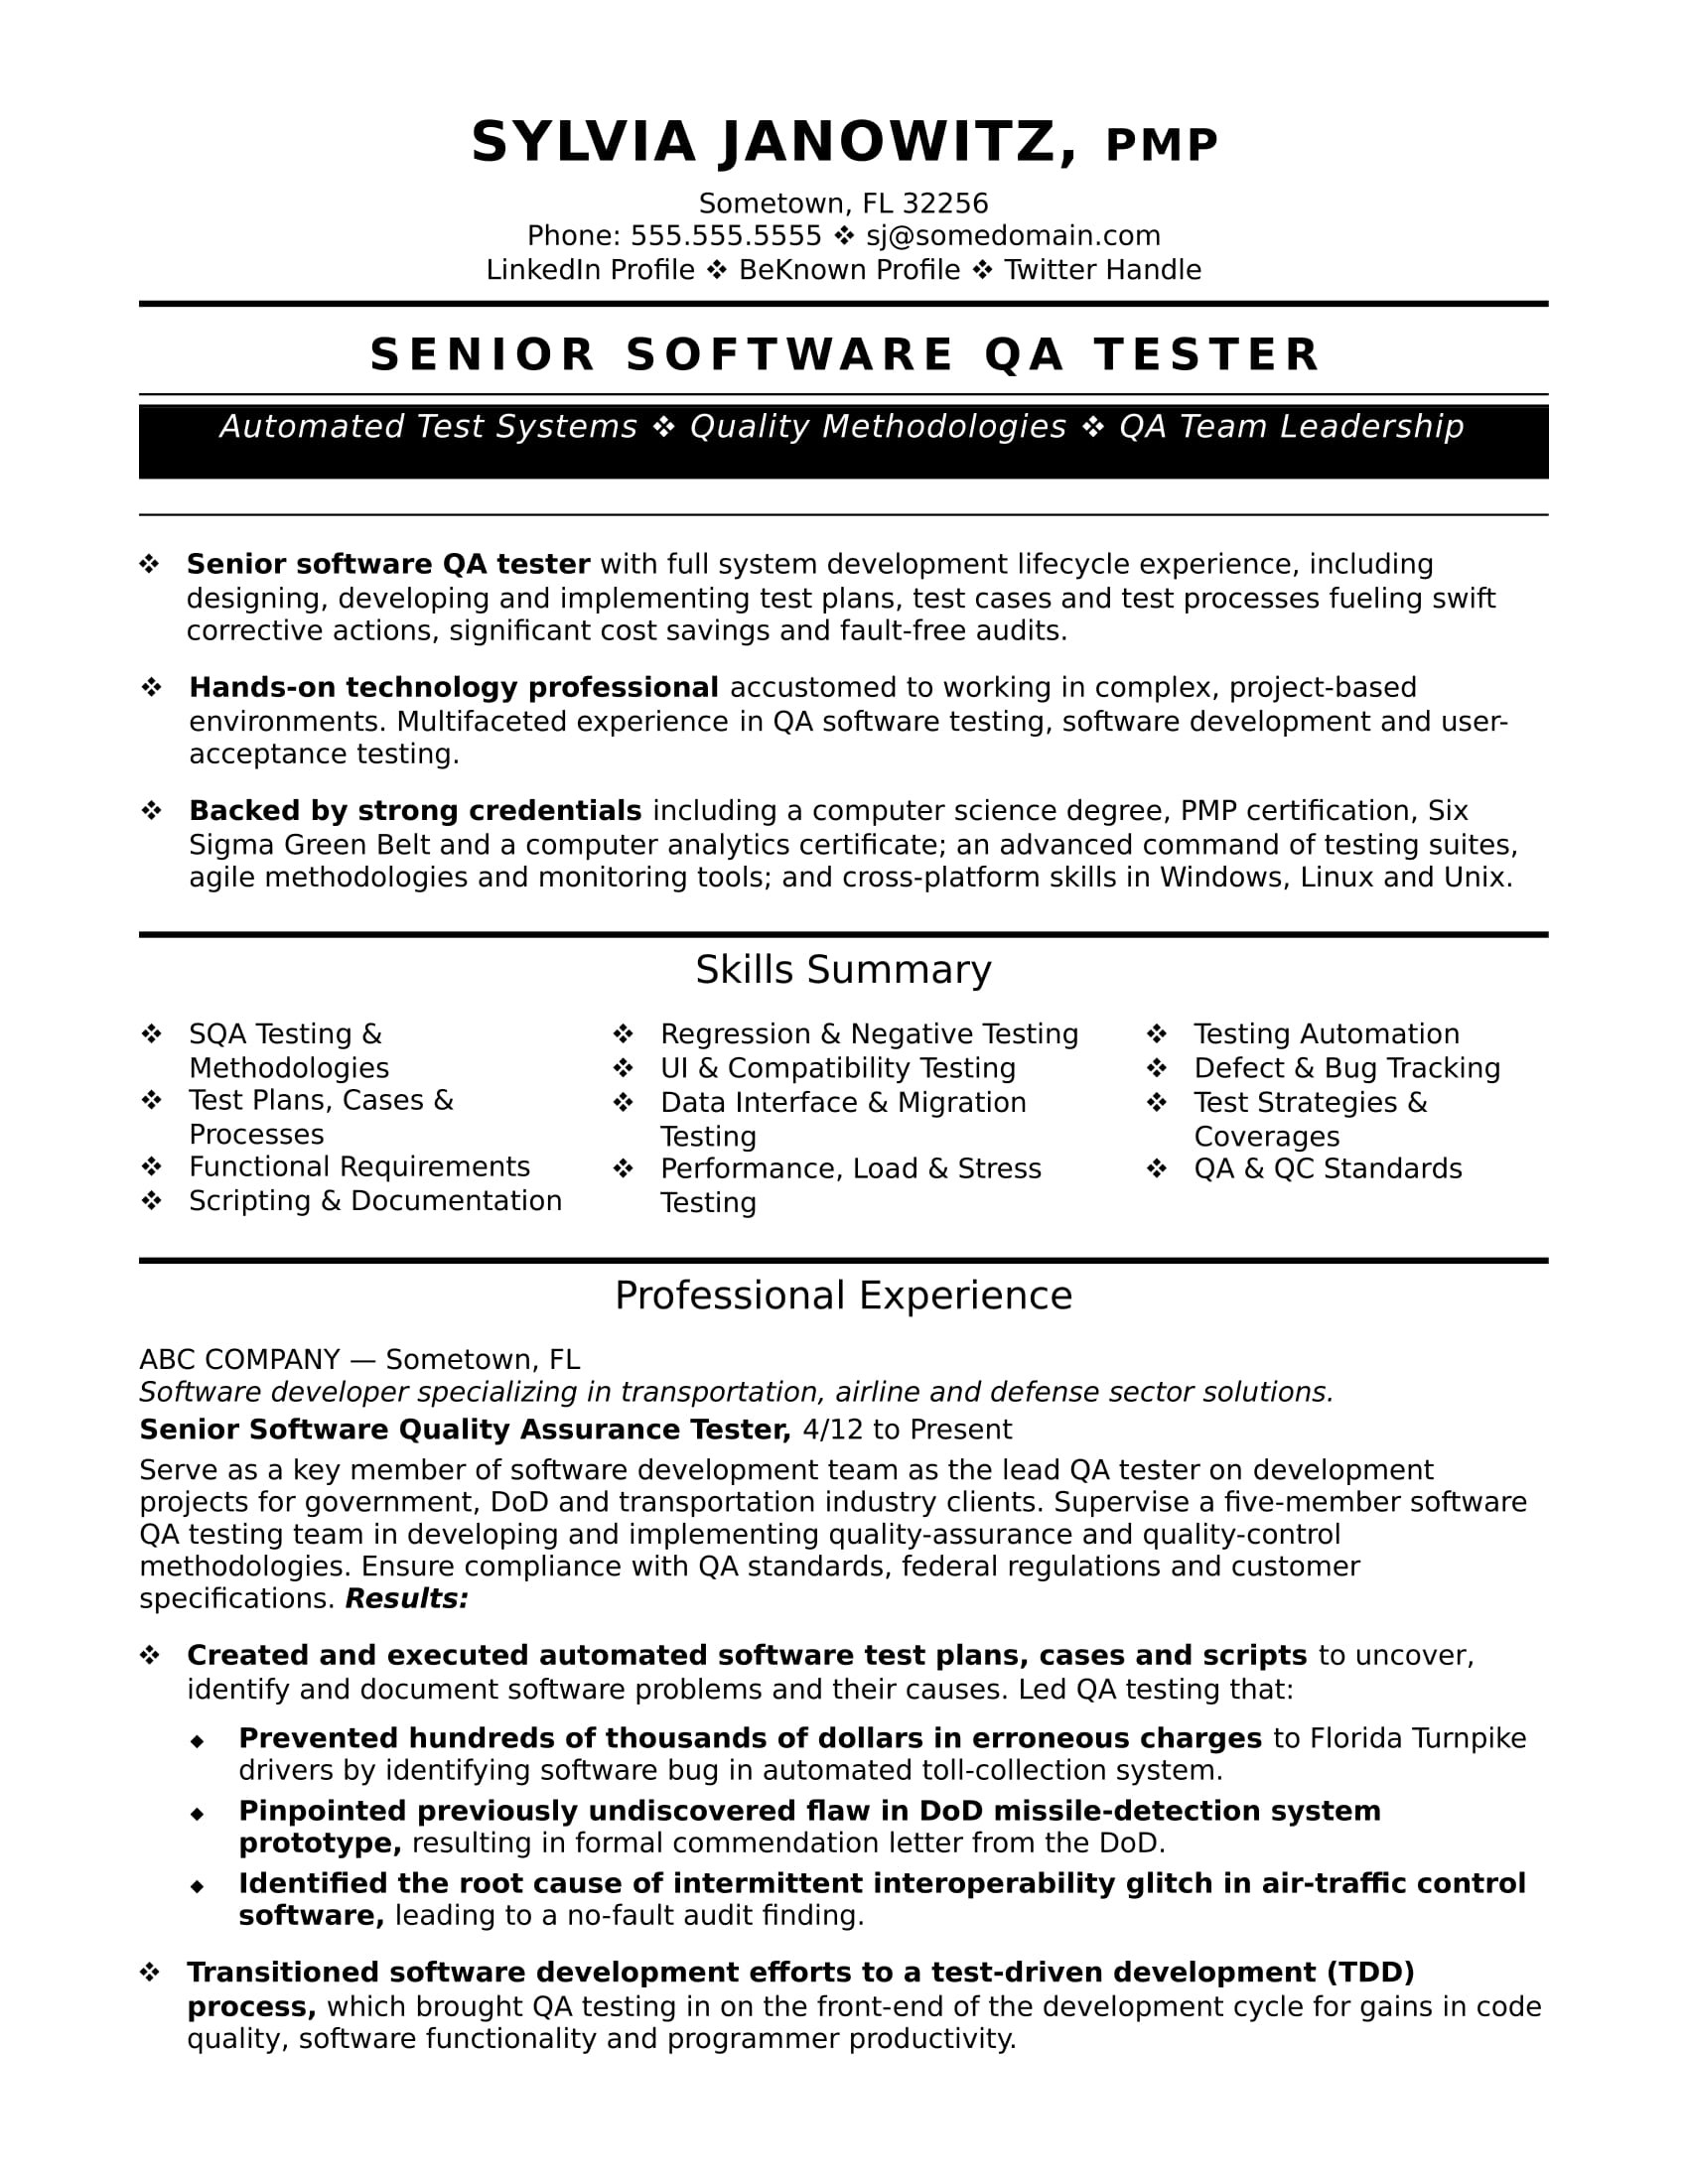 Manual Testing Sample Resume for 2 Years Experience Experienced Qa software Tester Resume Sample Monster.com